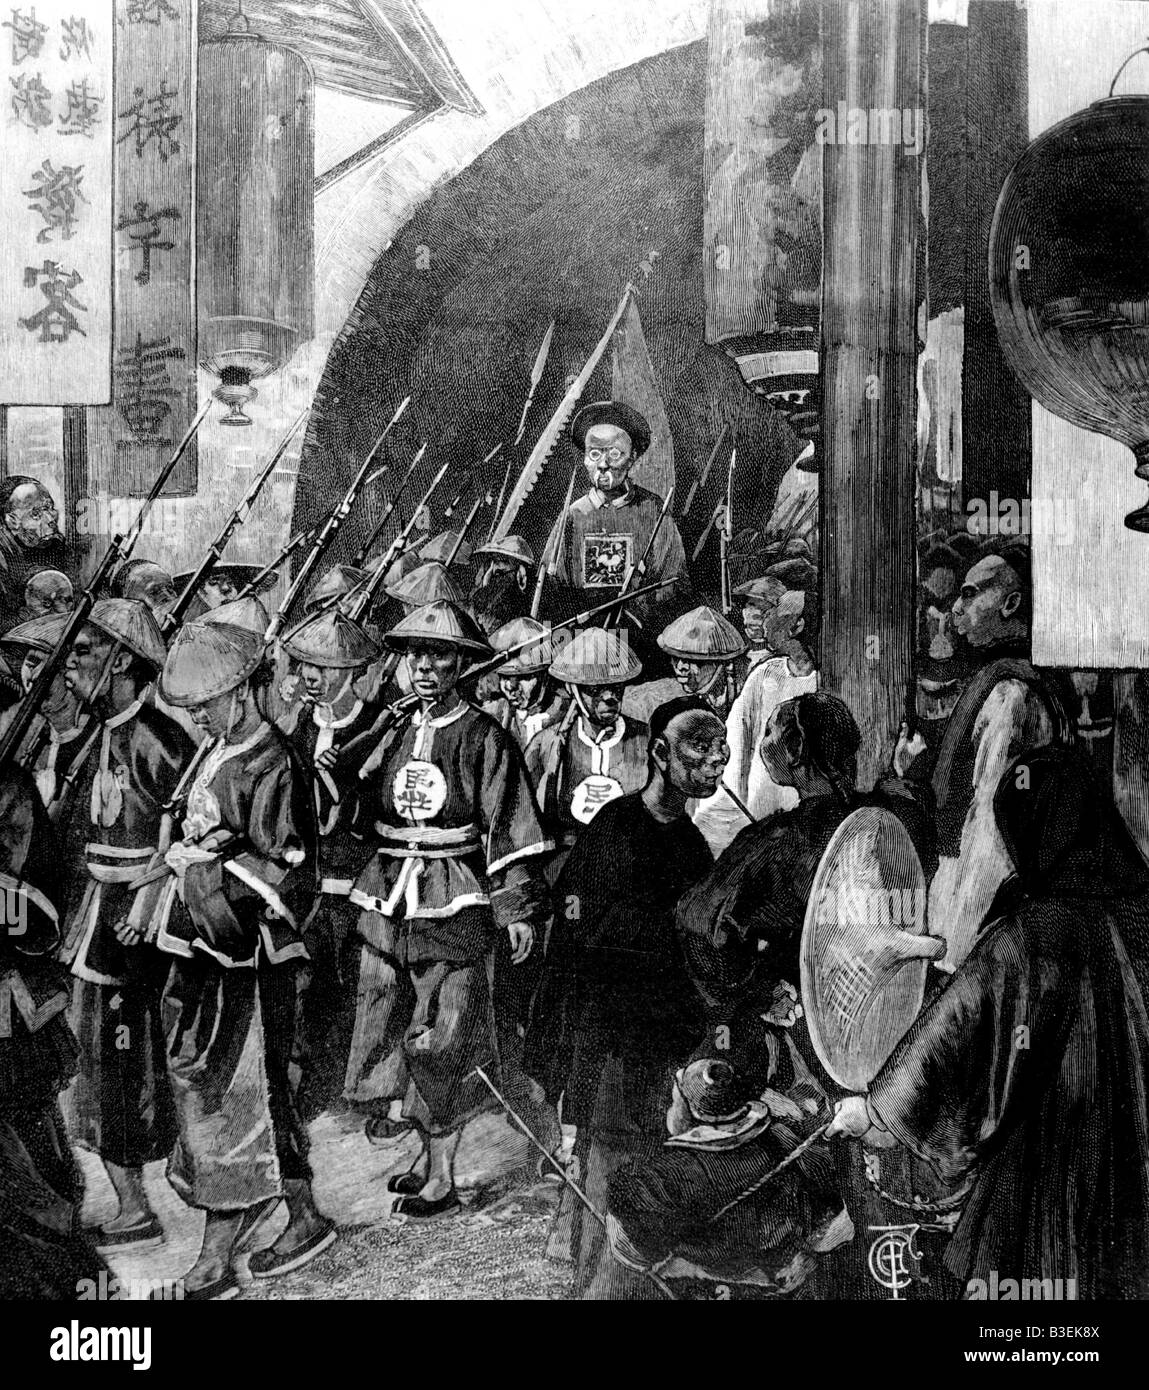 First Sino Japanese War Uniforms